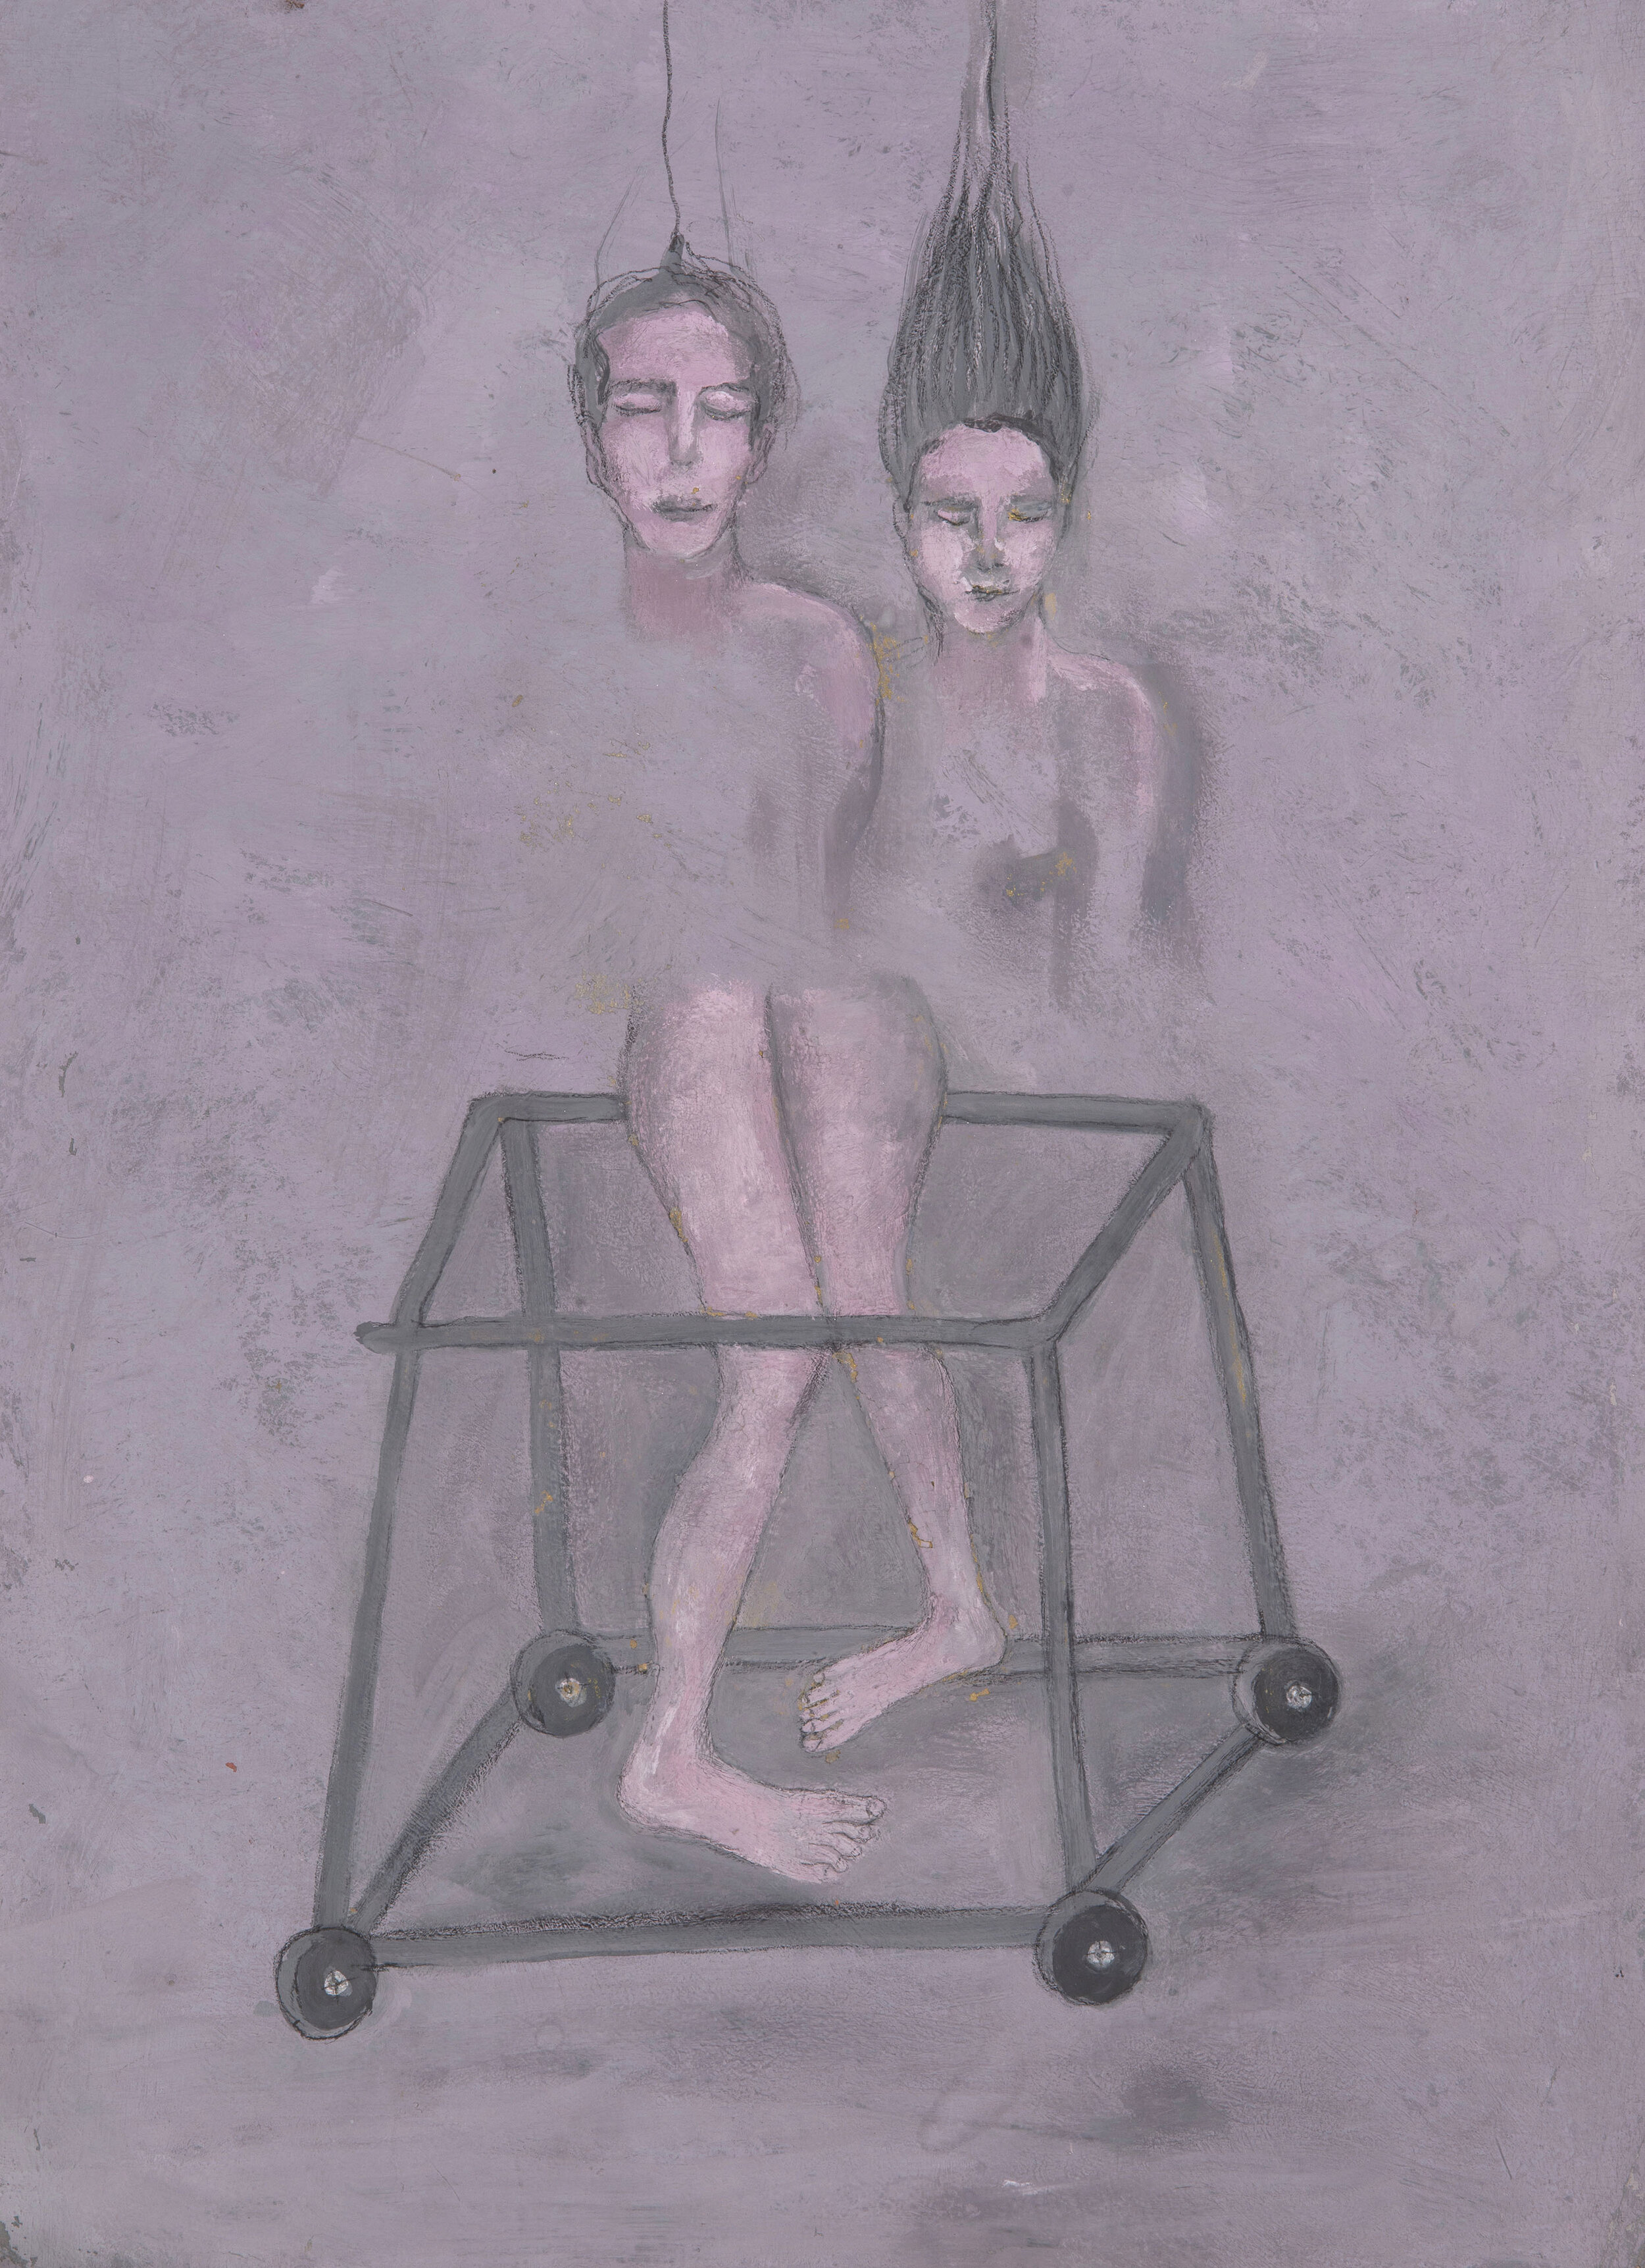  Edge of Dissolution, 2018, gouache and acrylic painting, 35.5 x 34 cm 